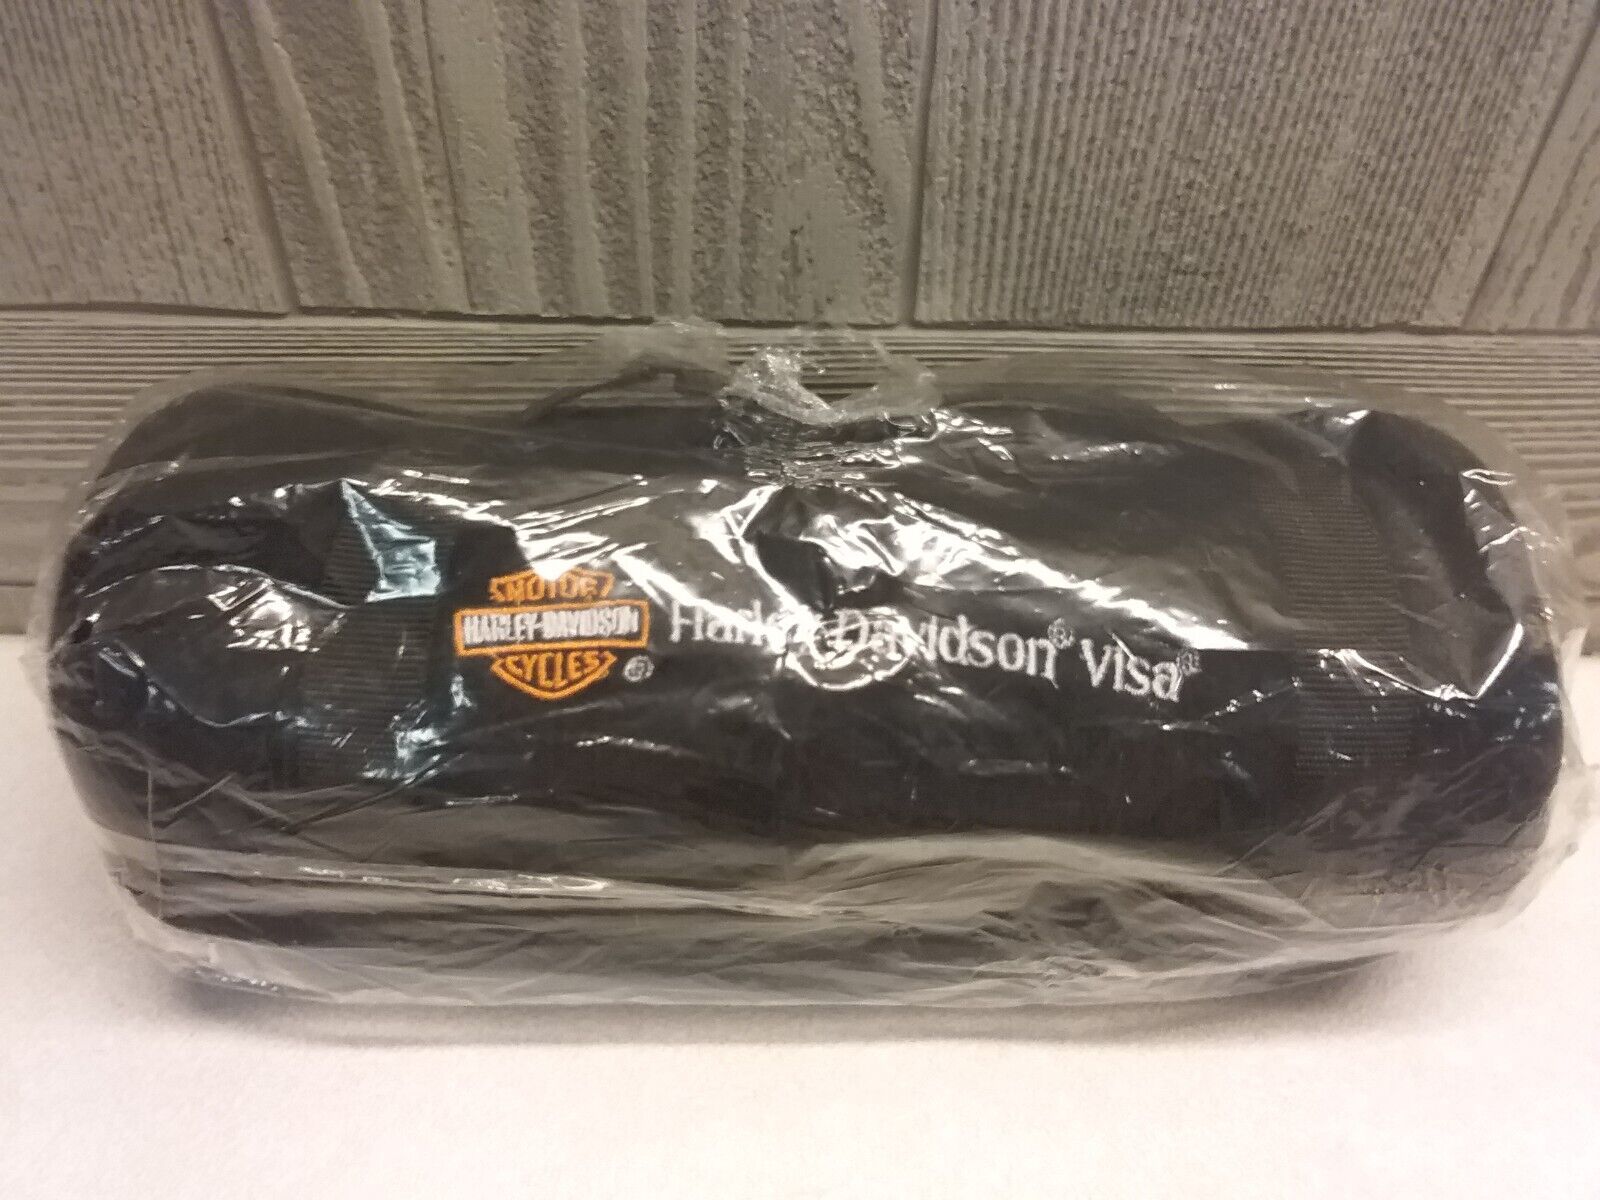 Harley Davidson Visa Fleece Blanket Throw Pillow Roll New Original Wrap Black